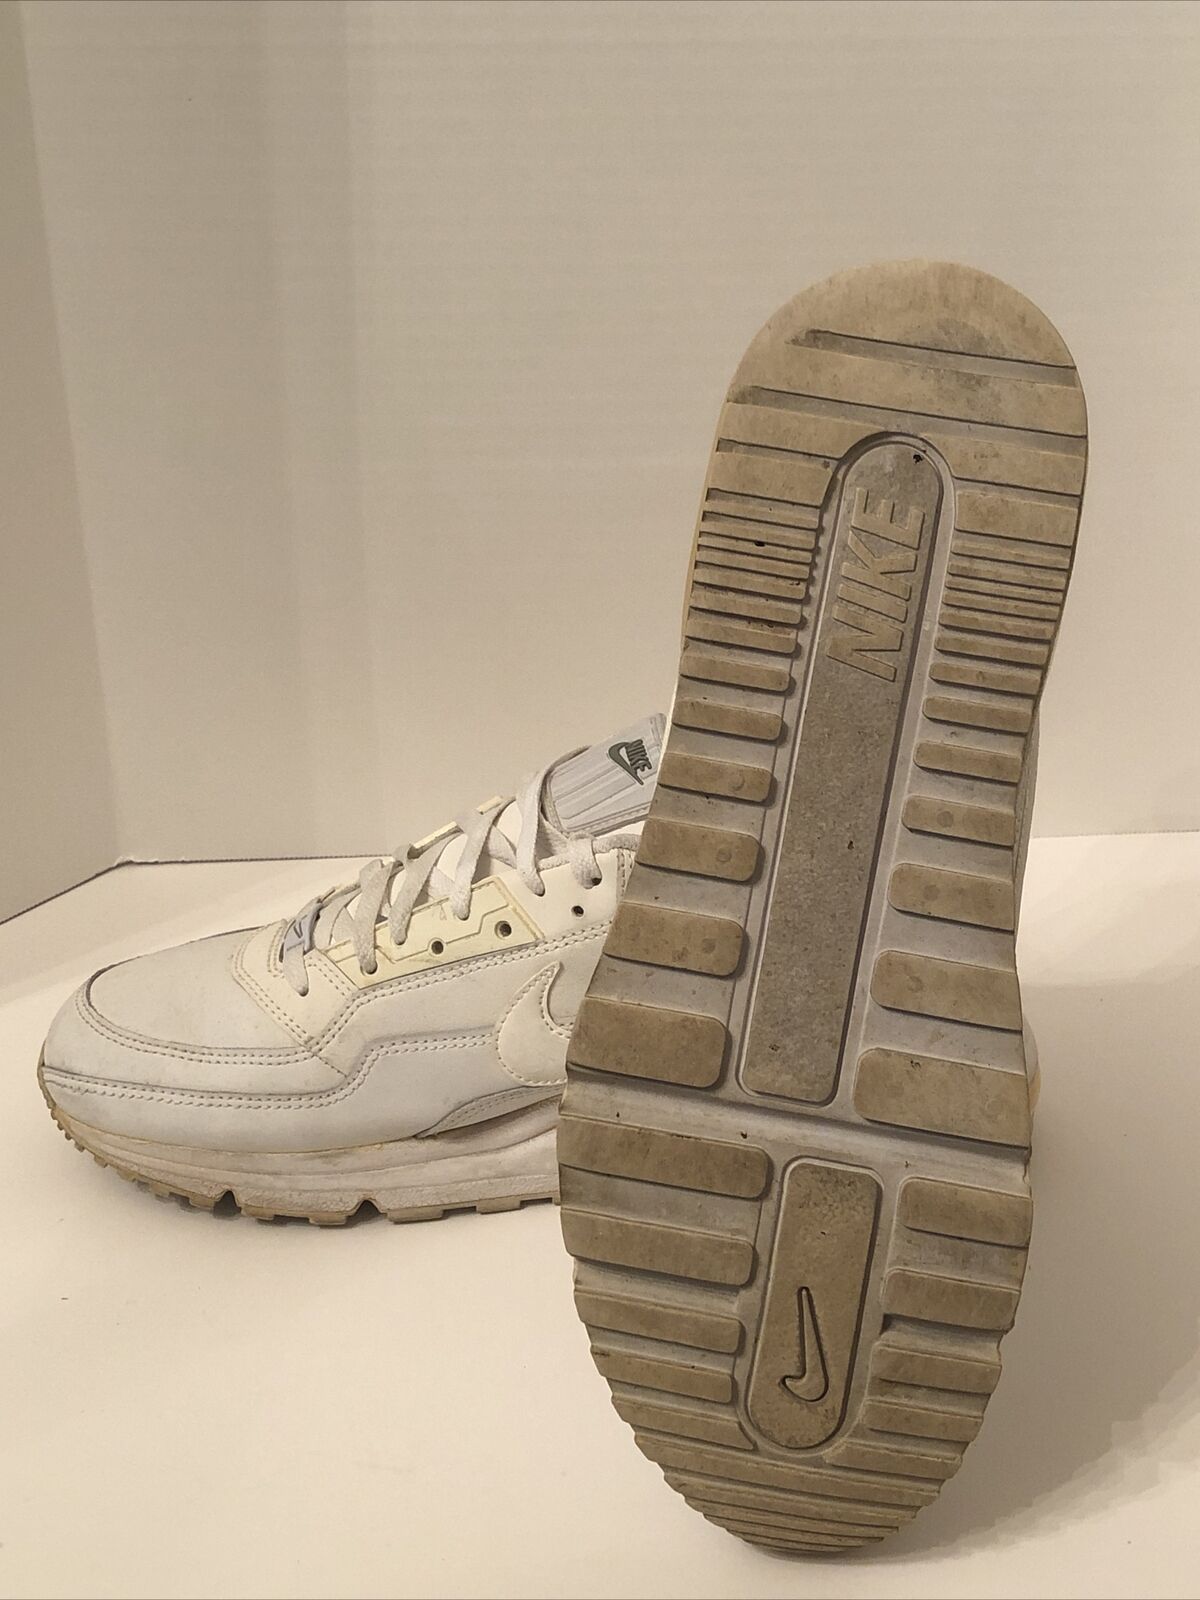 Nike Air Max LTD Mens Size 11 White Sneakers - image 7